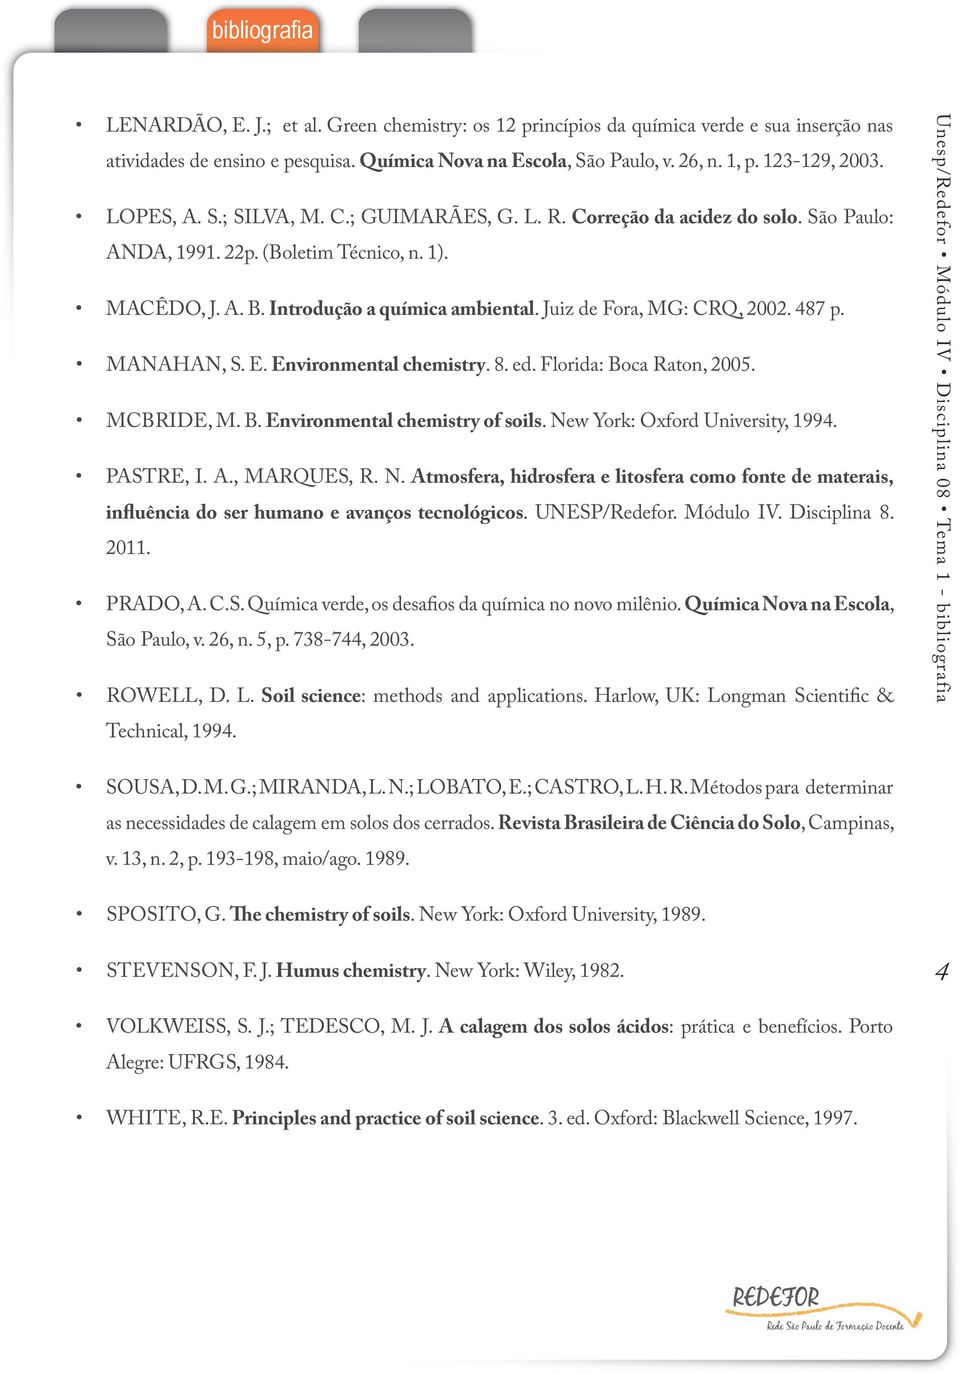 Juiz de Fora, MG: CRQ, 2002. 487 p. MANAHAN, S. E. Environmental chemistry. 8. ed. Florida: Boca Raton, 2005. MCBRIDE, M. B. Environmental chemistry of soils. New York: Oxford University, 1994.